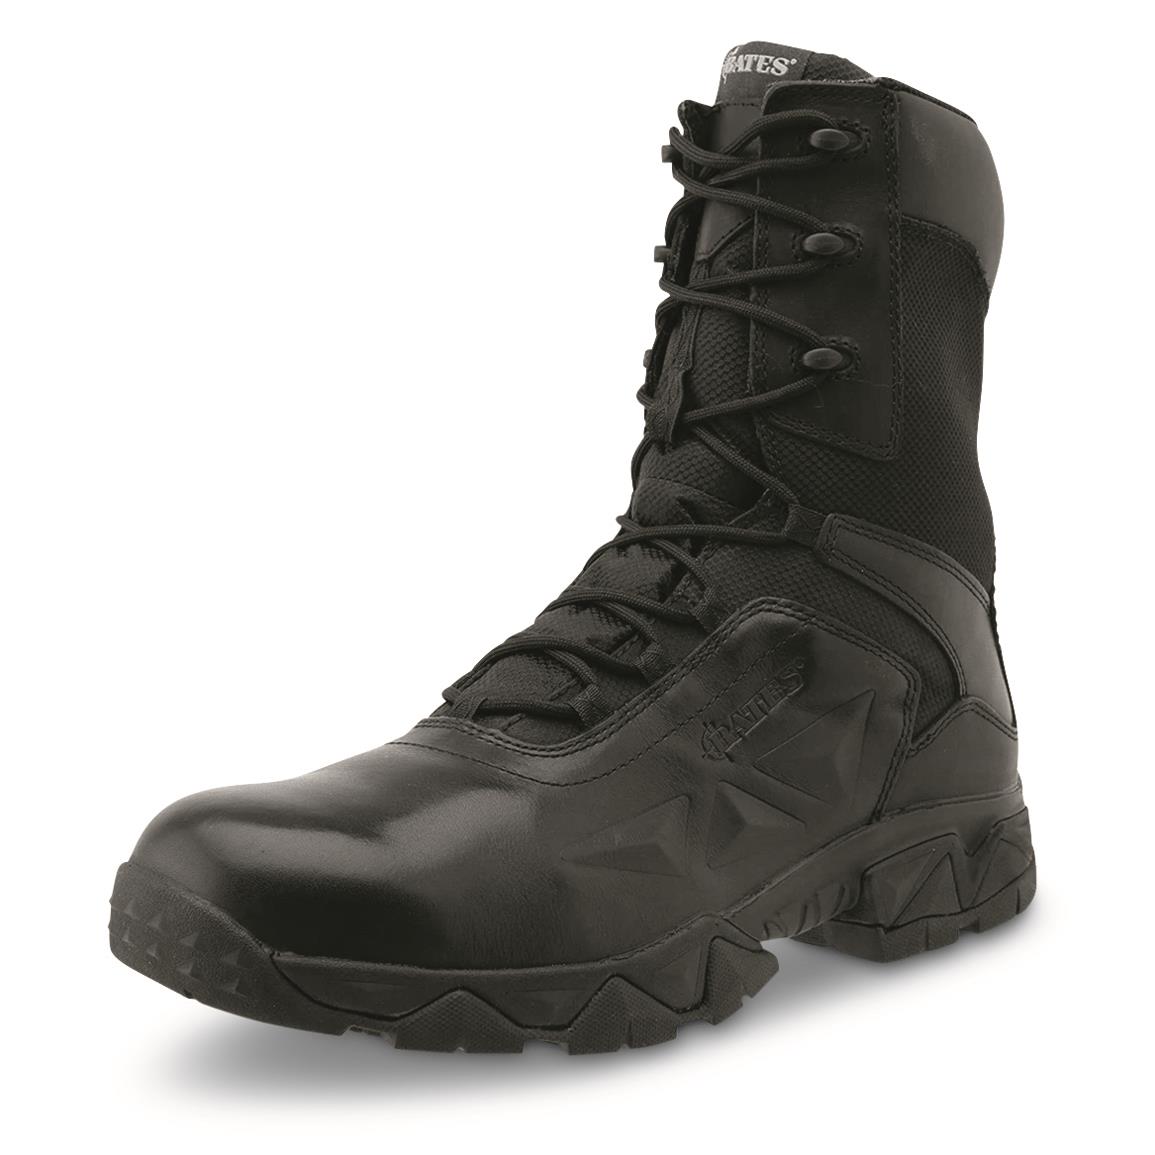 U.S. Military Surplus Bates Delta Nitro Side Zip Tactical Boots, New, Black